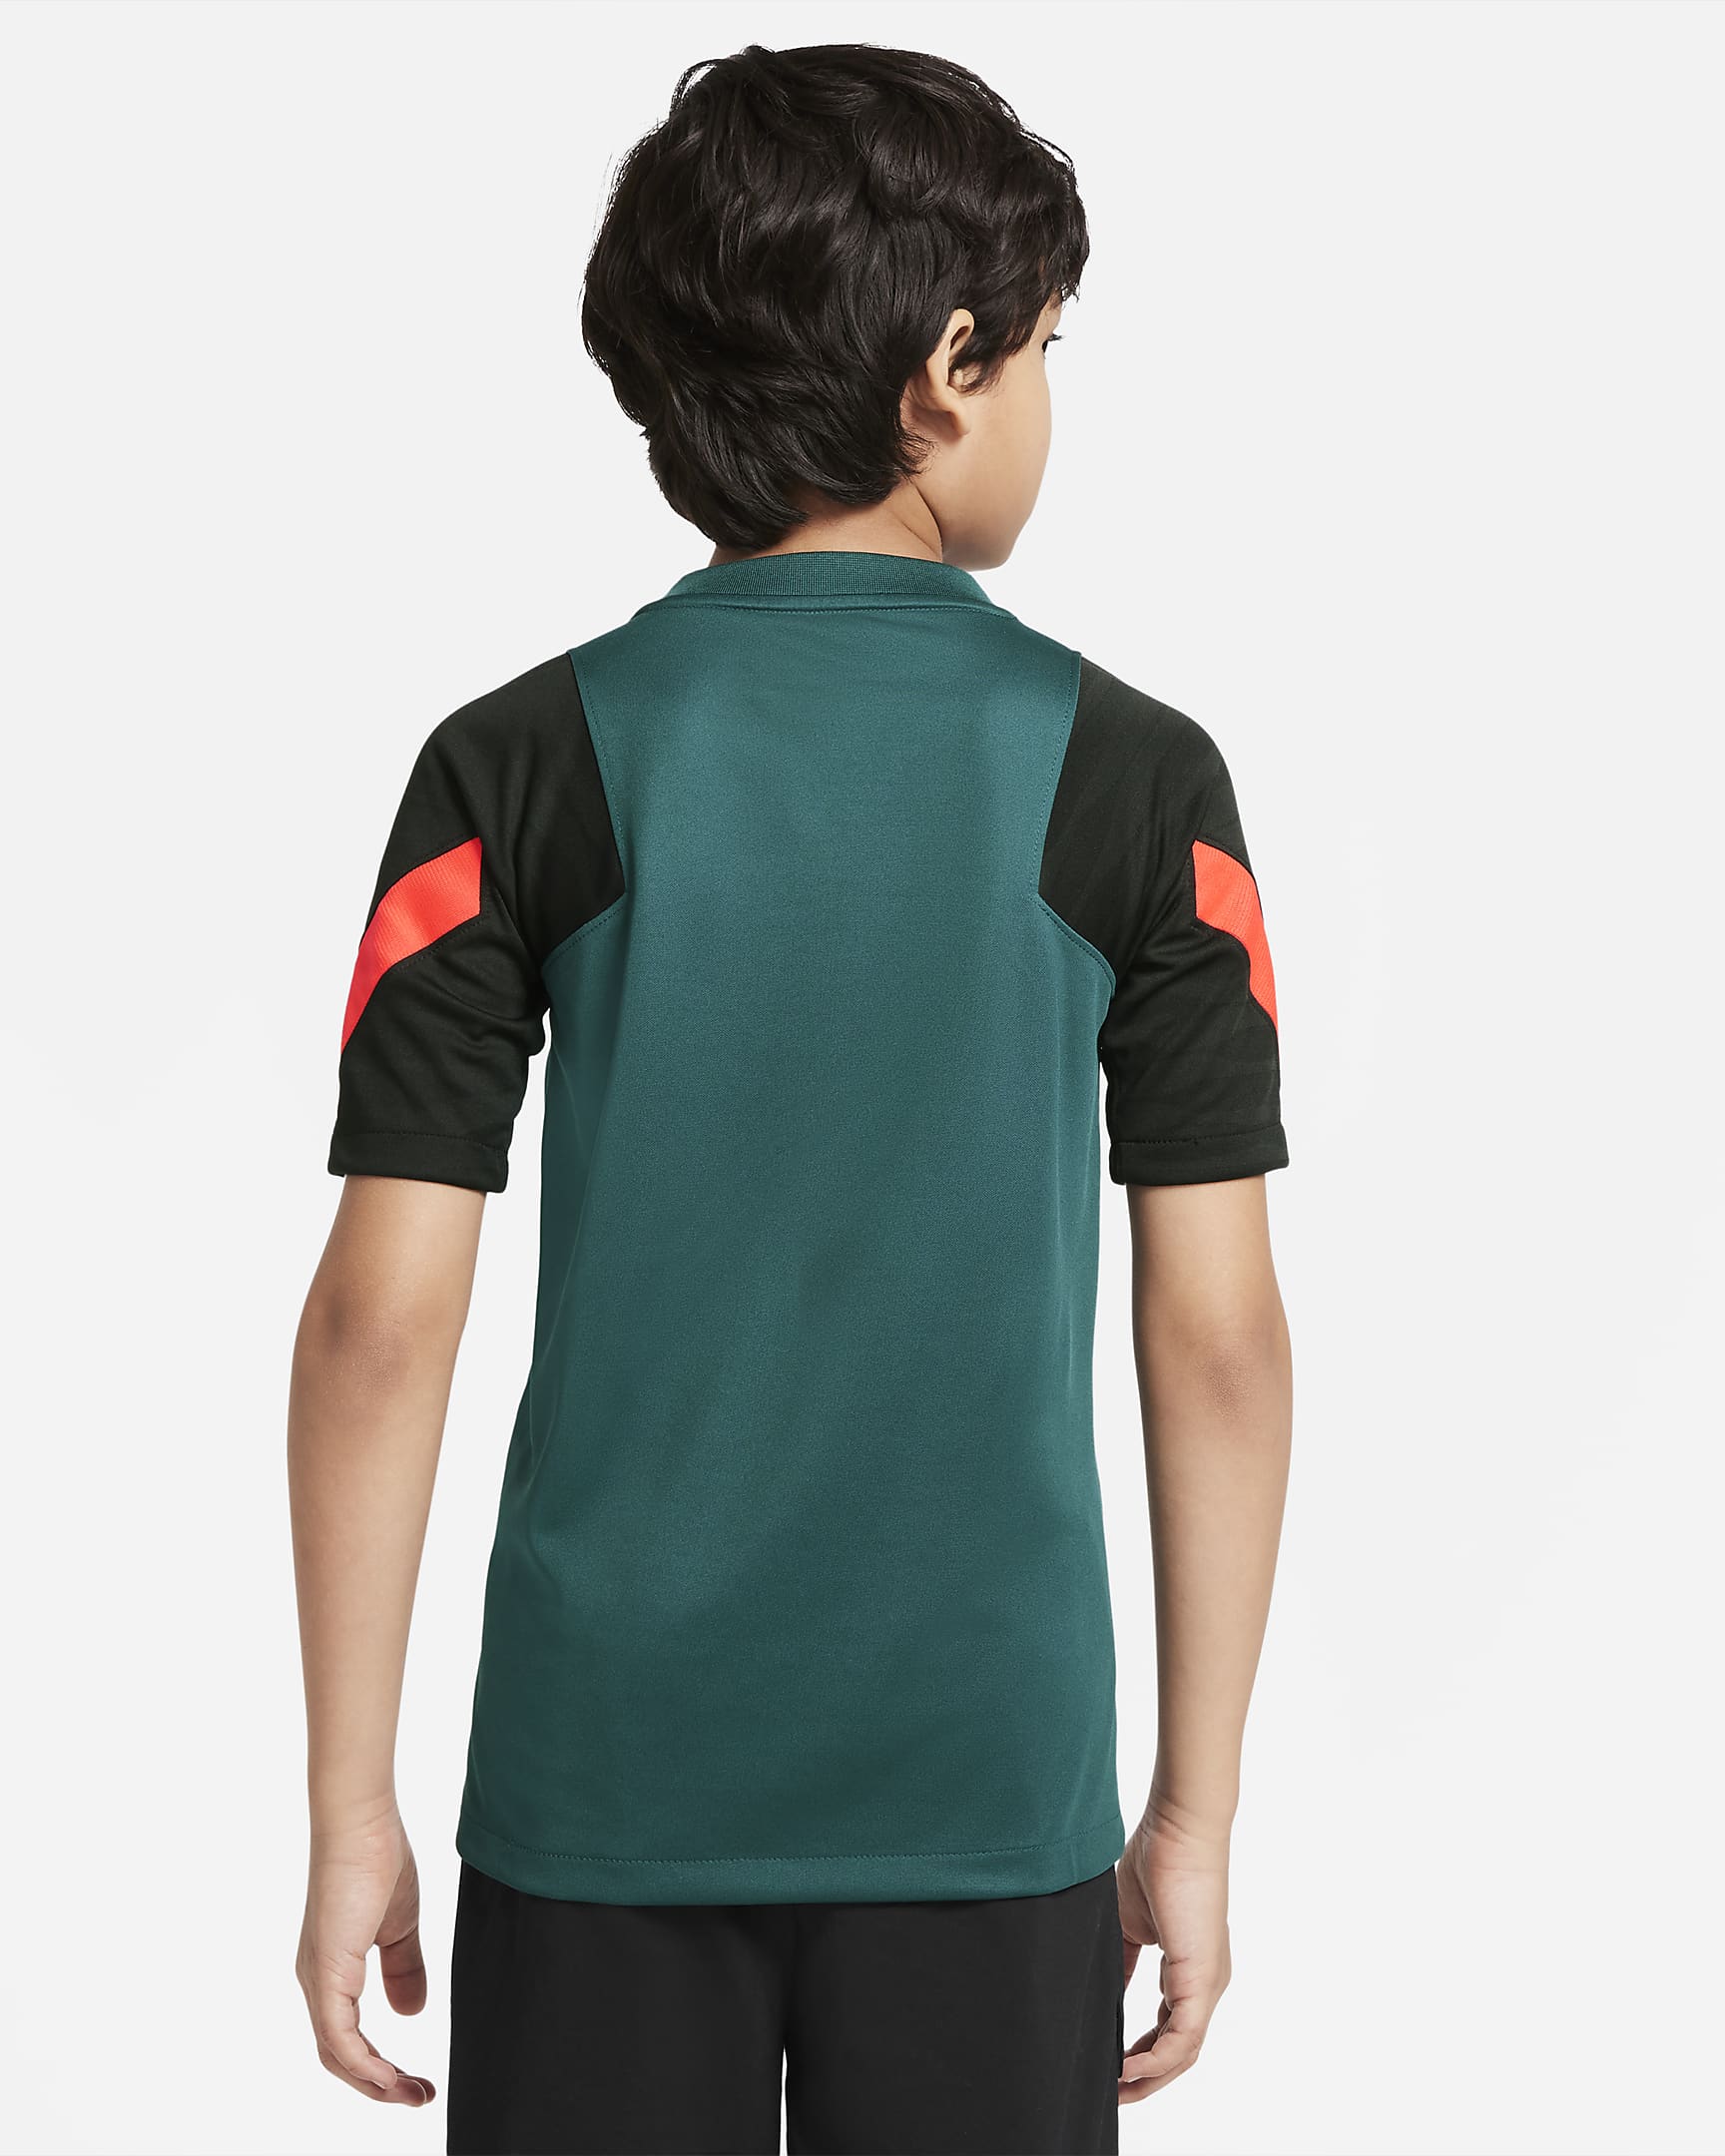 Liverpool F.C. Strike Older Kids' Short-Sleeve Football Top. Nike ID